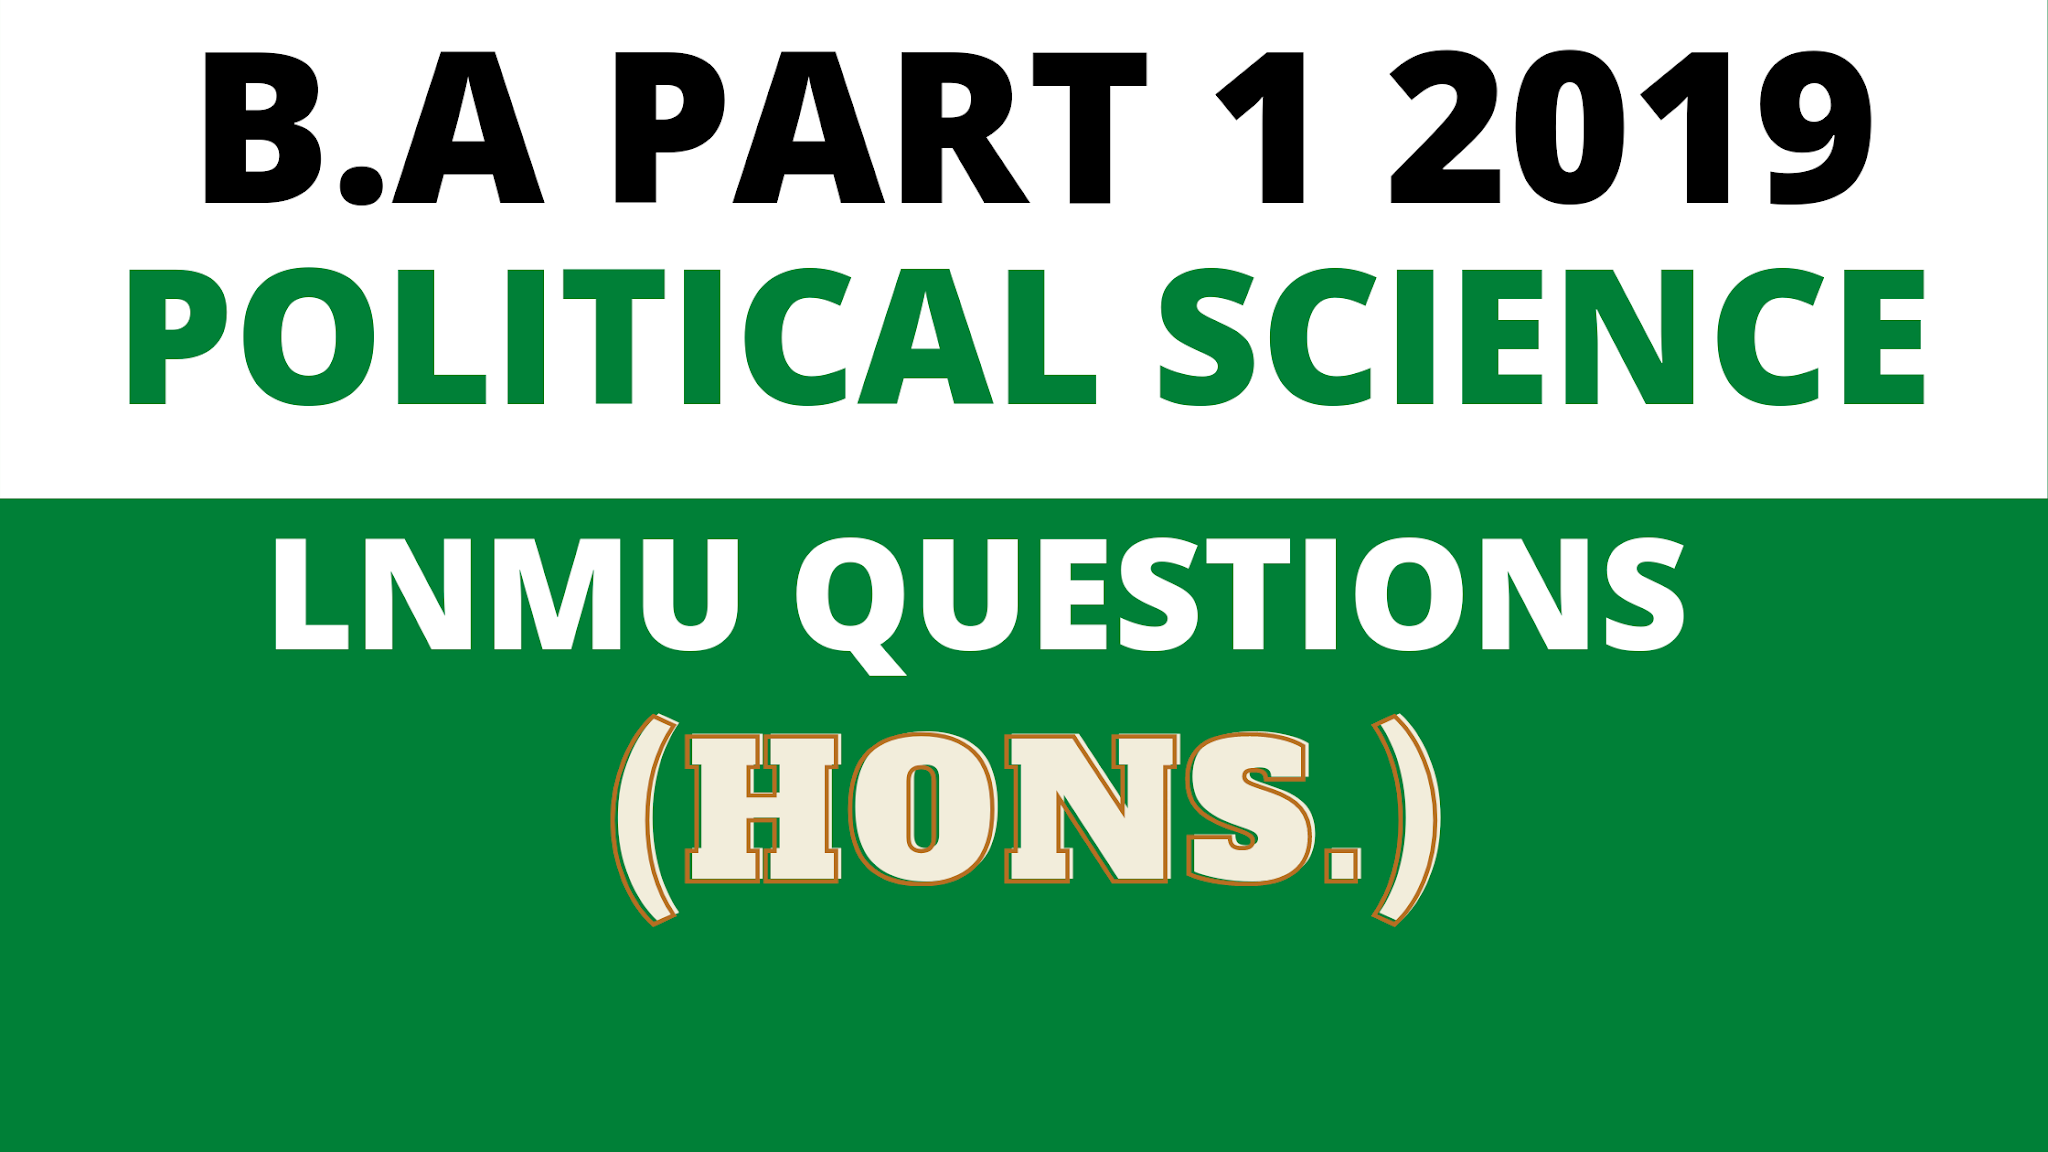 B.A PART 1 POLITICAL SCIENCE QUESTION LNMU NOTES